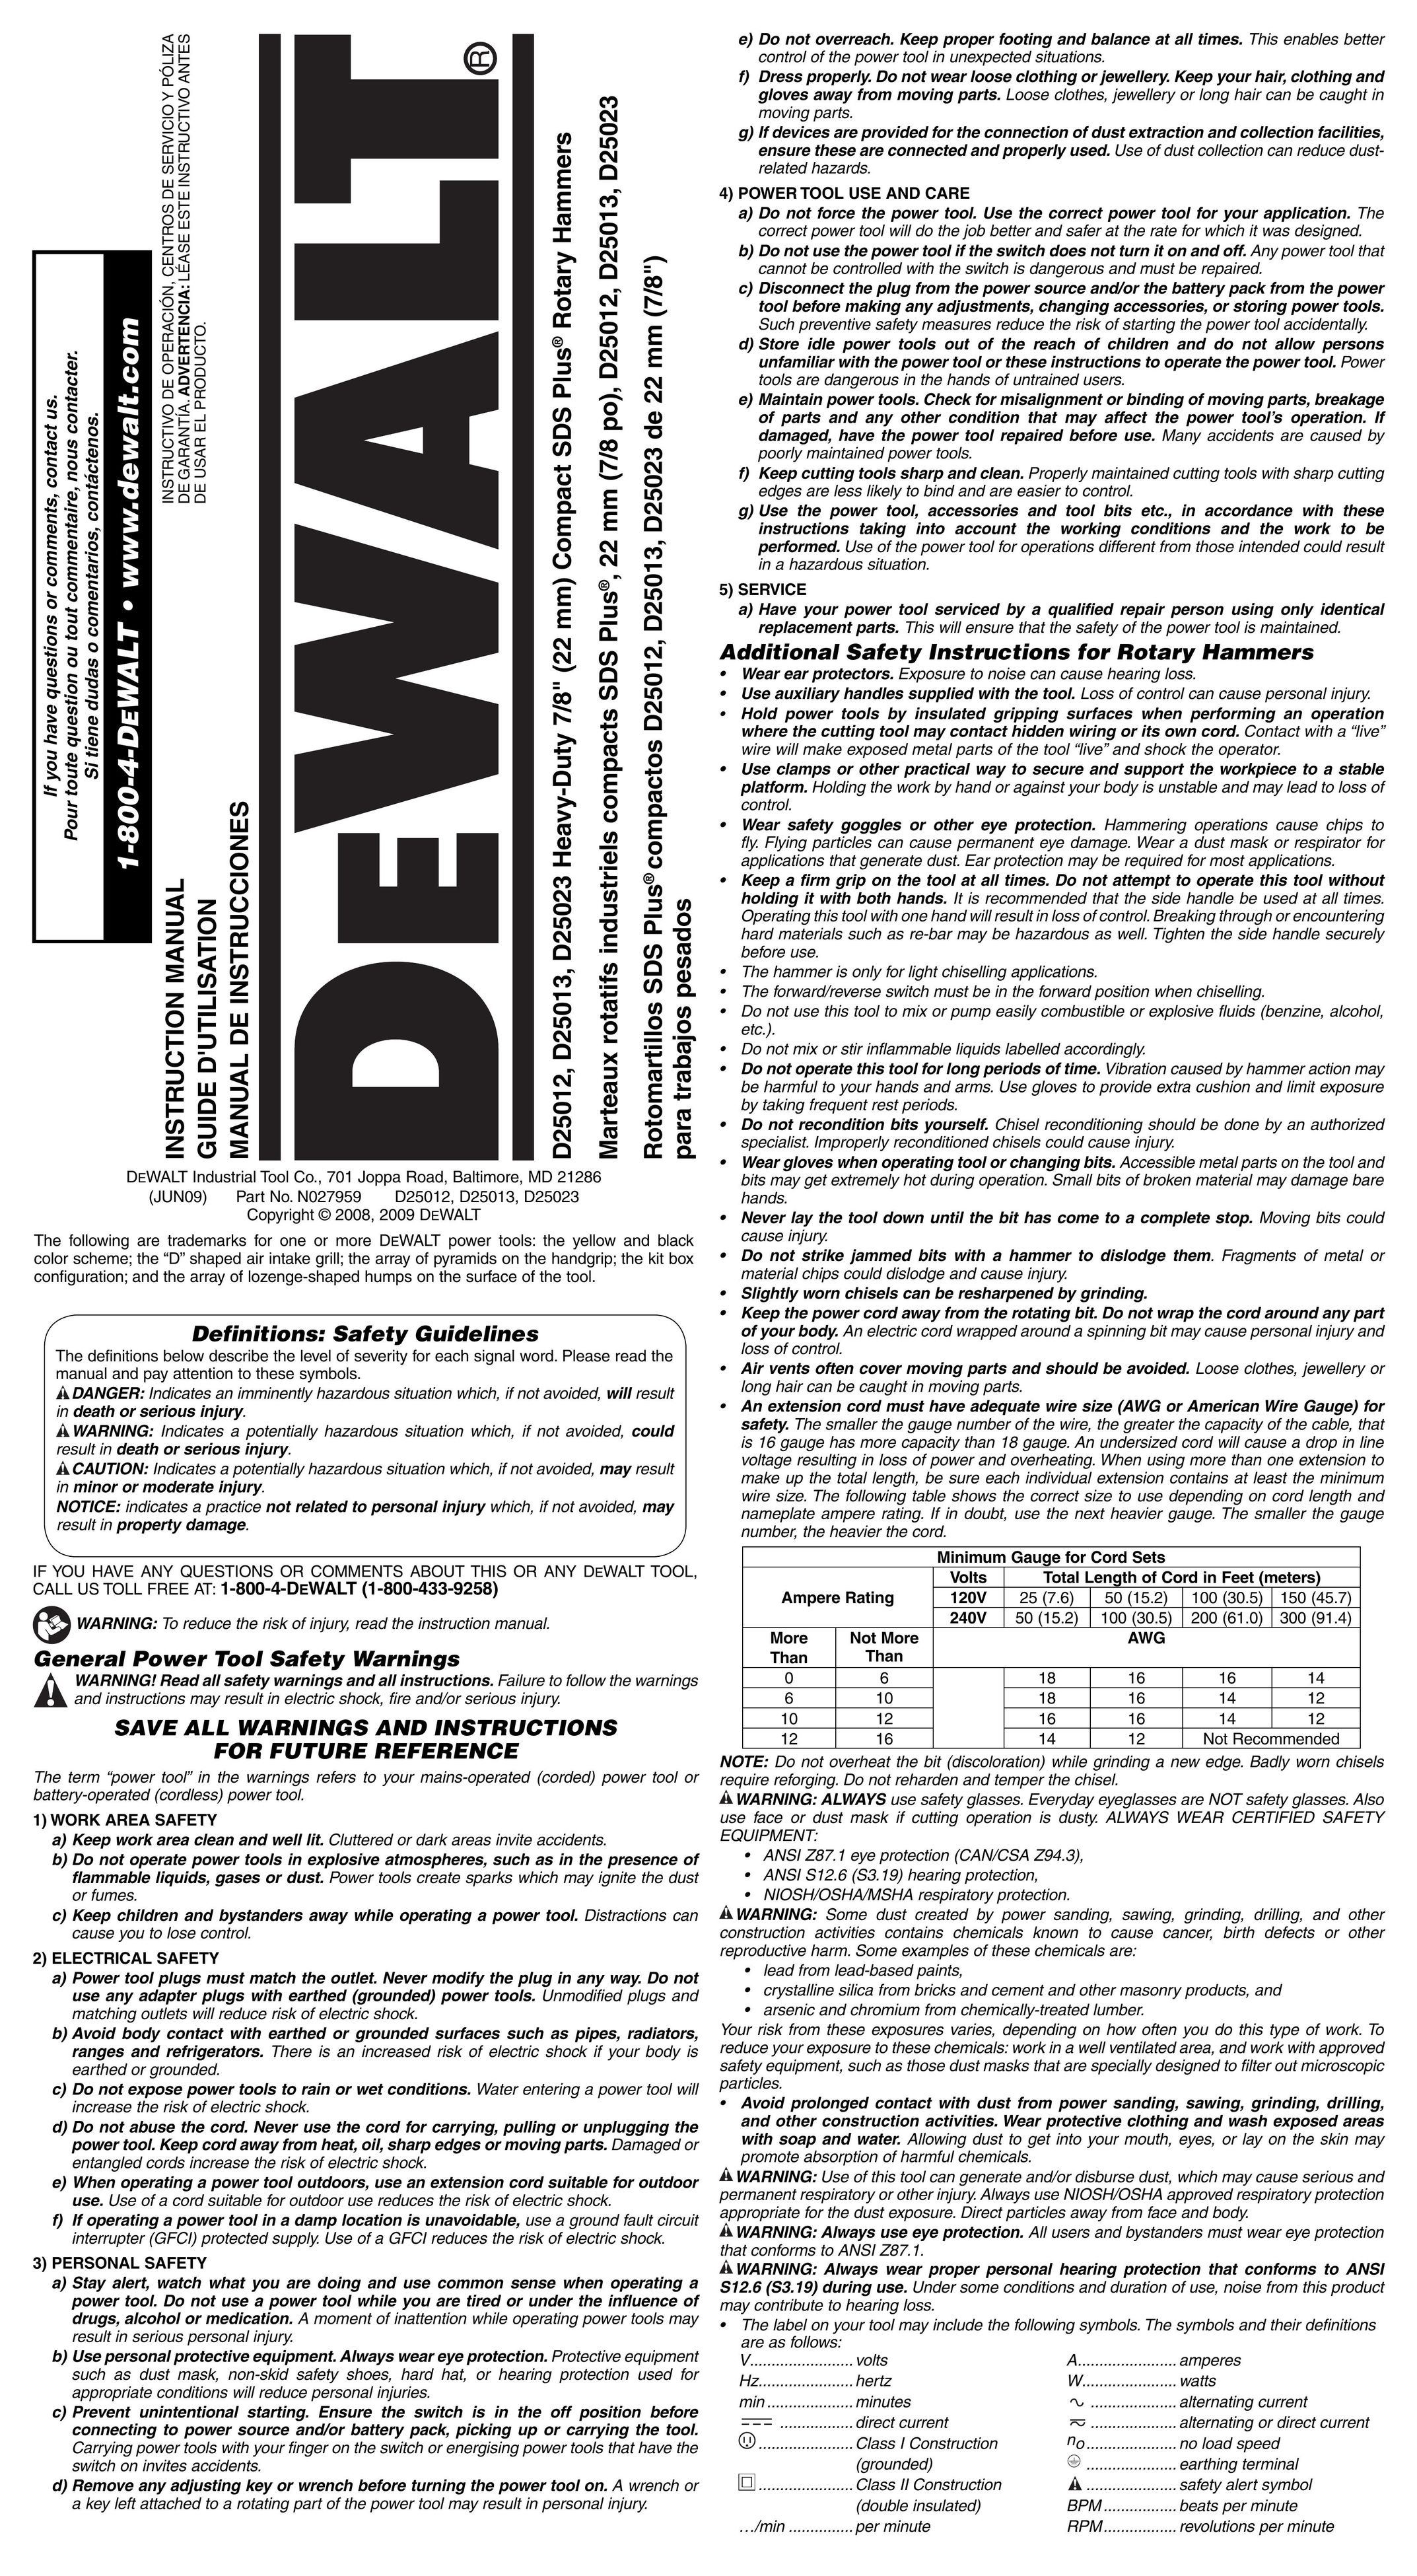 DeWalt D25023 Power Hammer User Manual